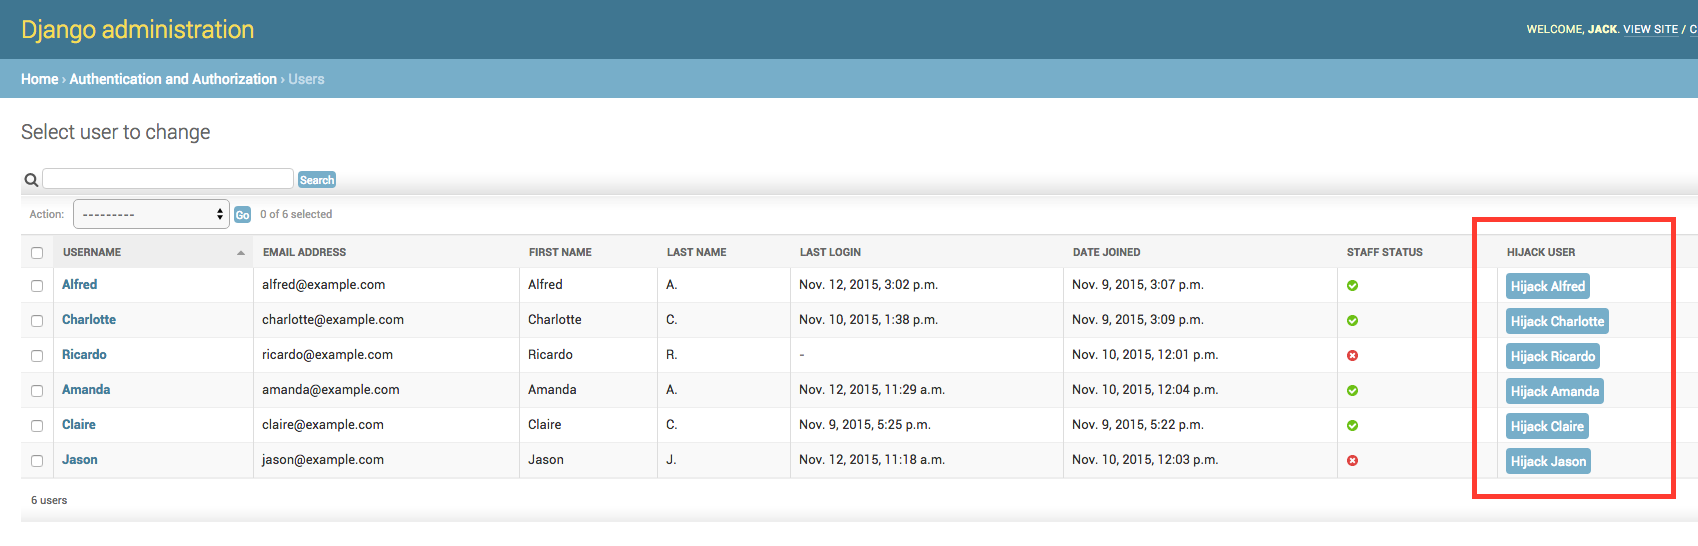 Screenshot of the django admin user list with a hijack column